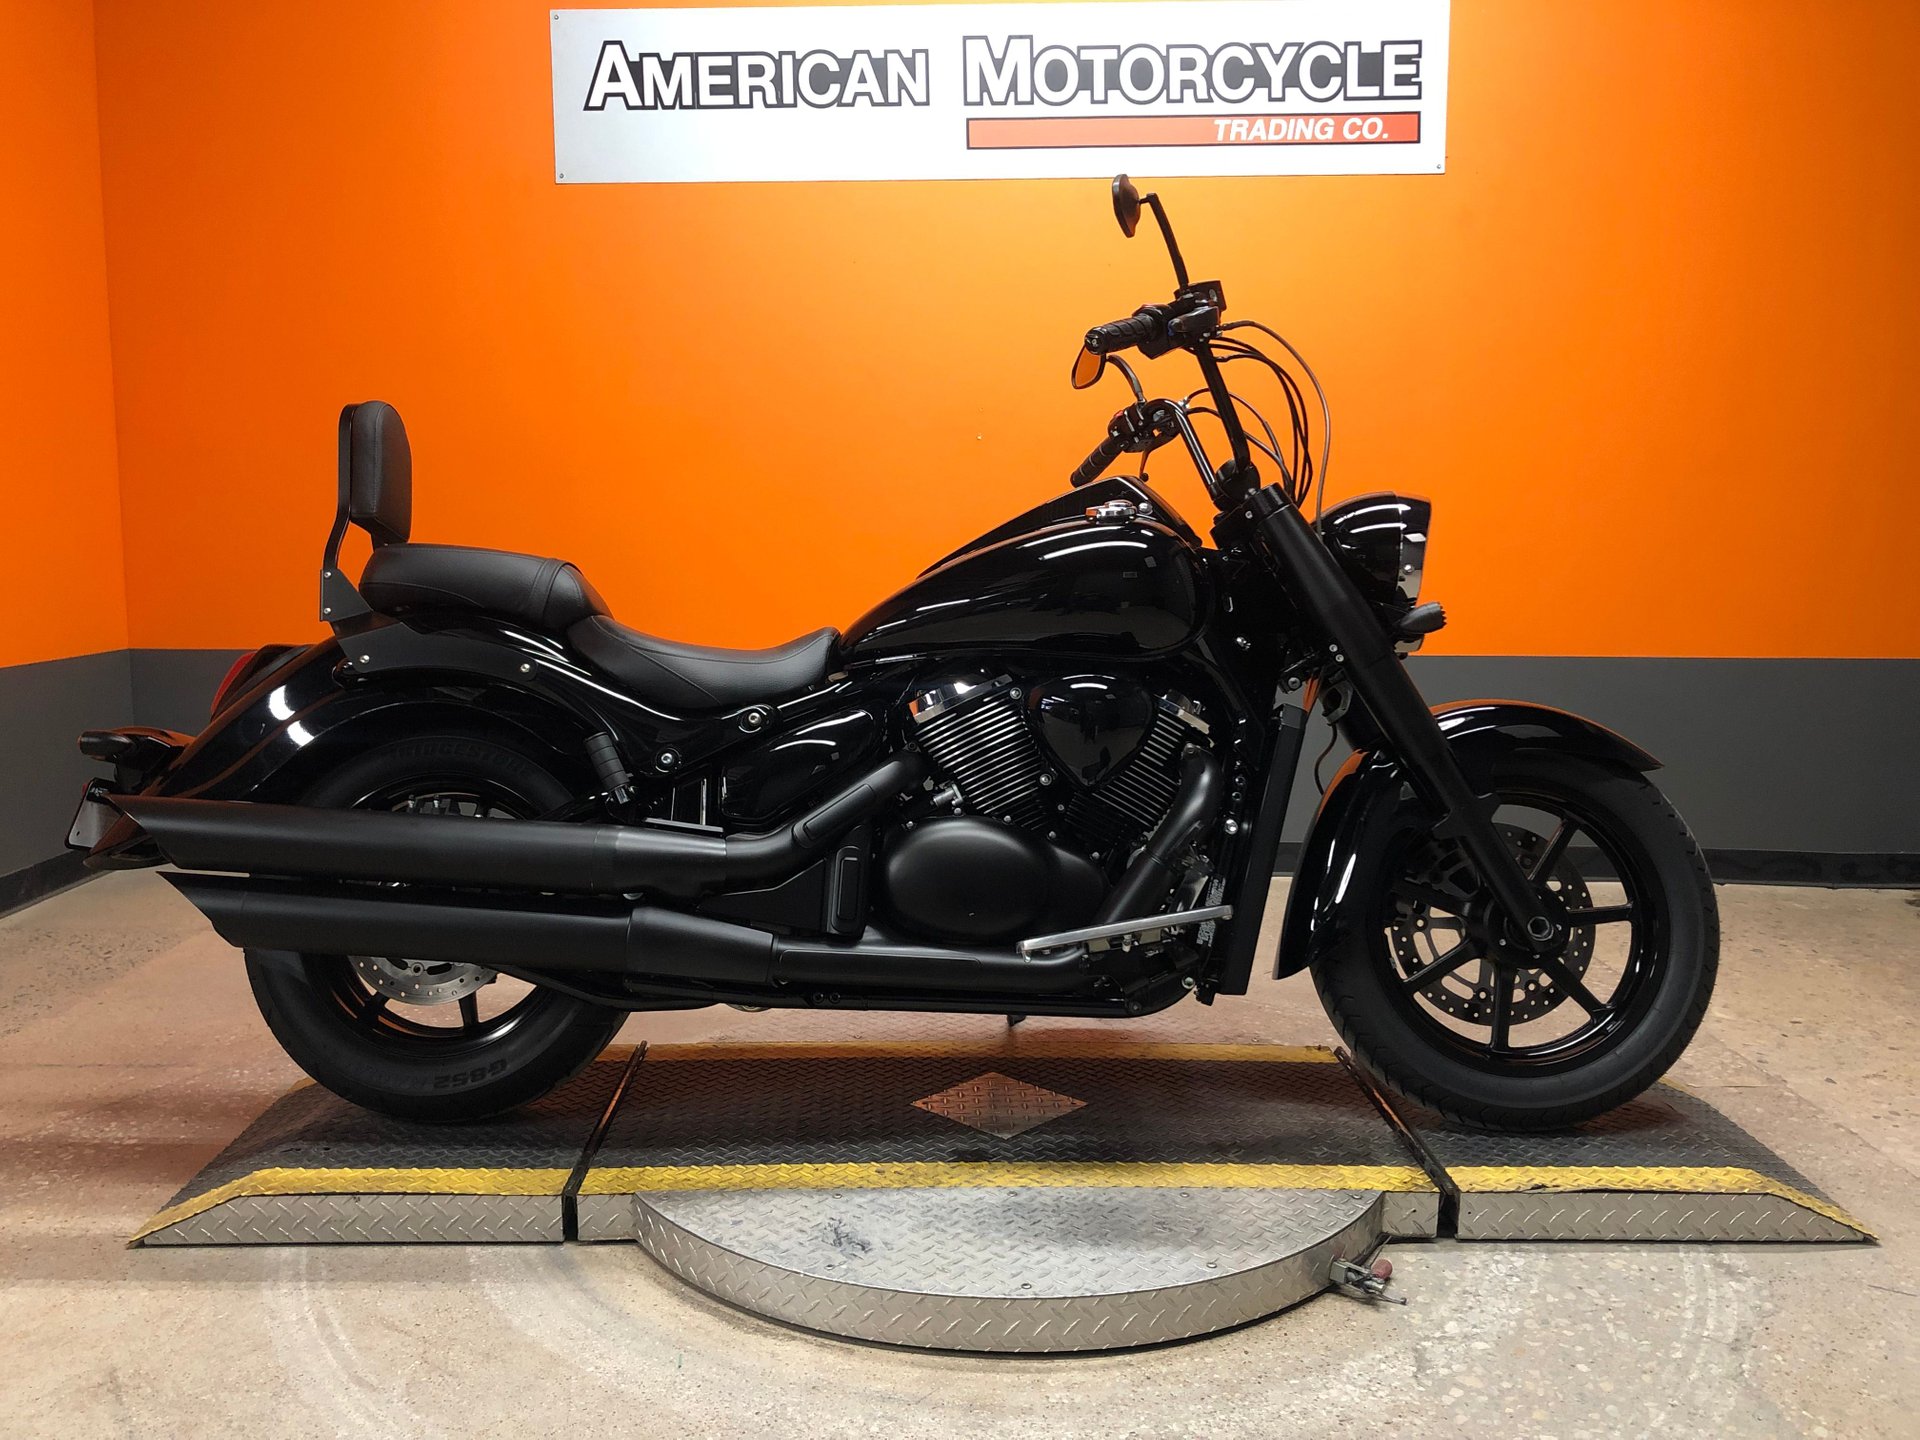 2014 Suzuki Boulevard | American Motorcycle Trading Company - Used ...